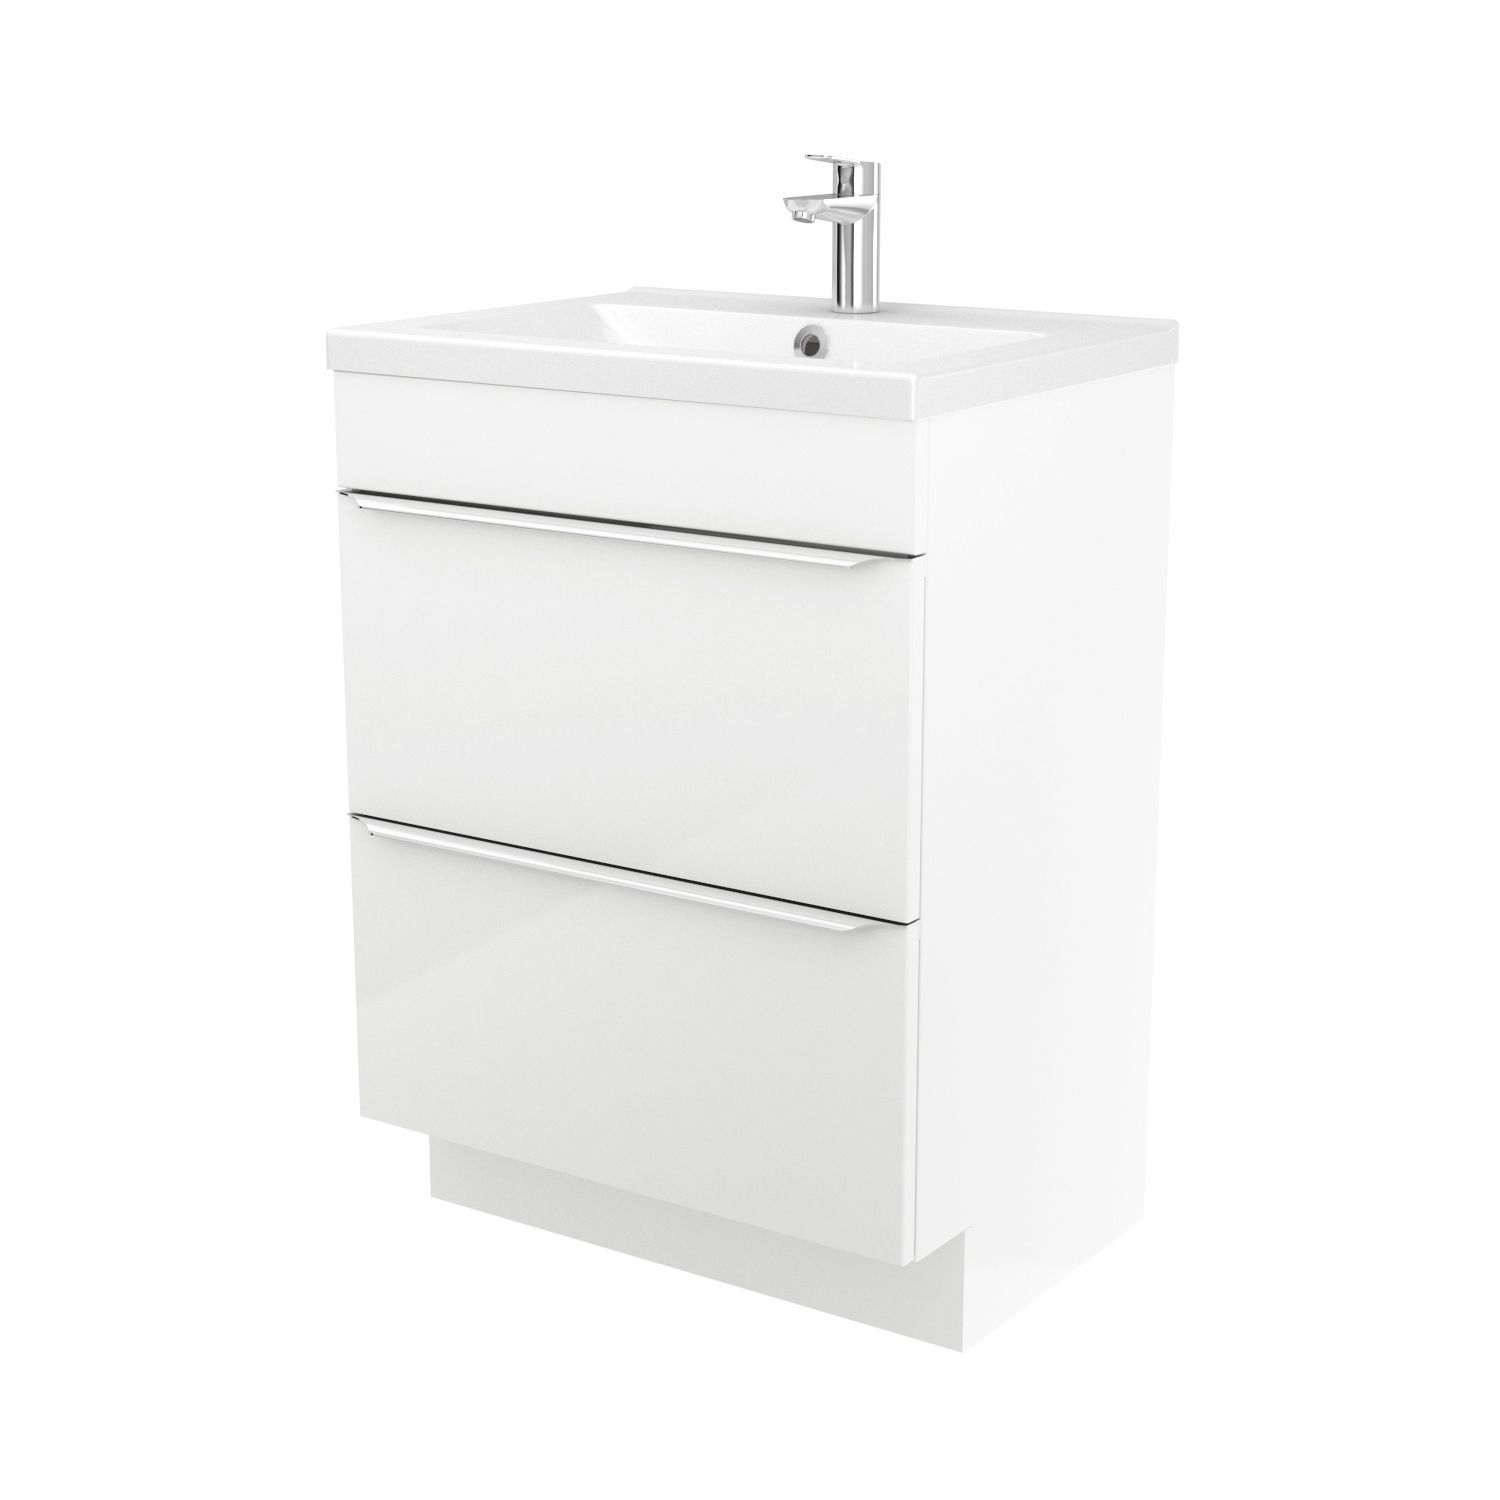 Goodhome Imandra Gloss White Freestanding Vanity Basin Cabinet W600mm H820mm Diy At Bq